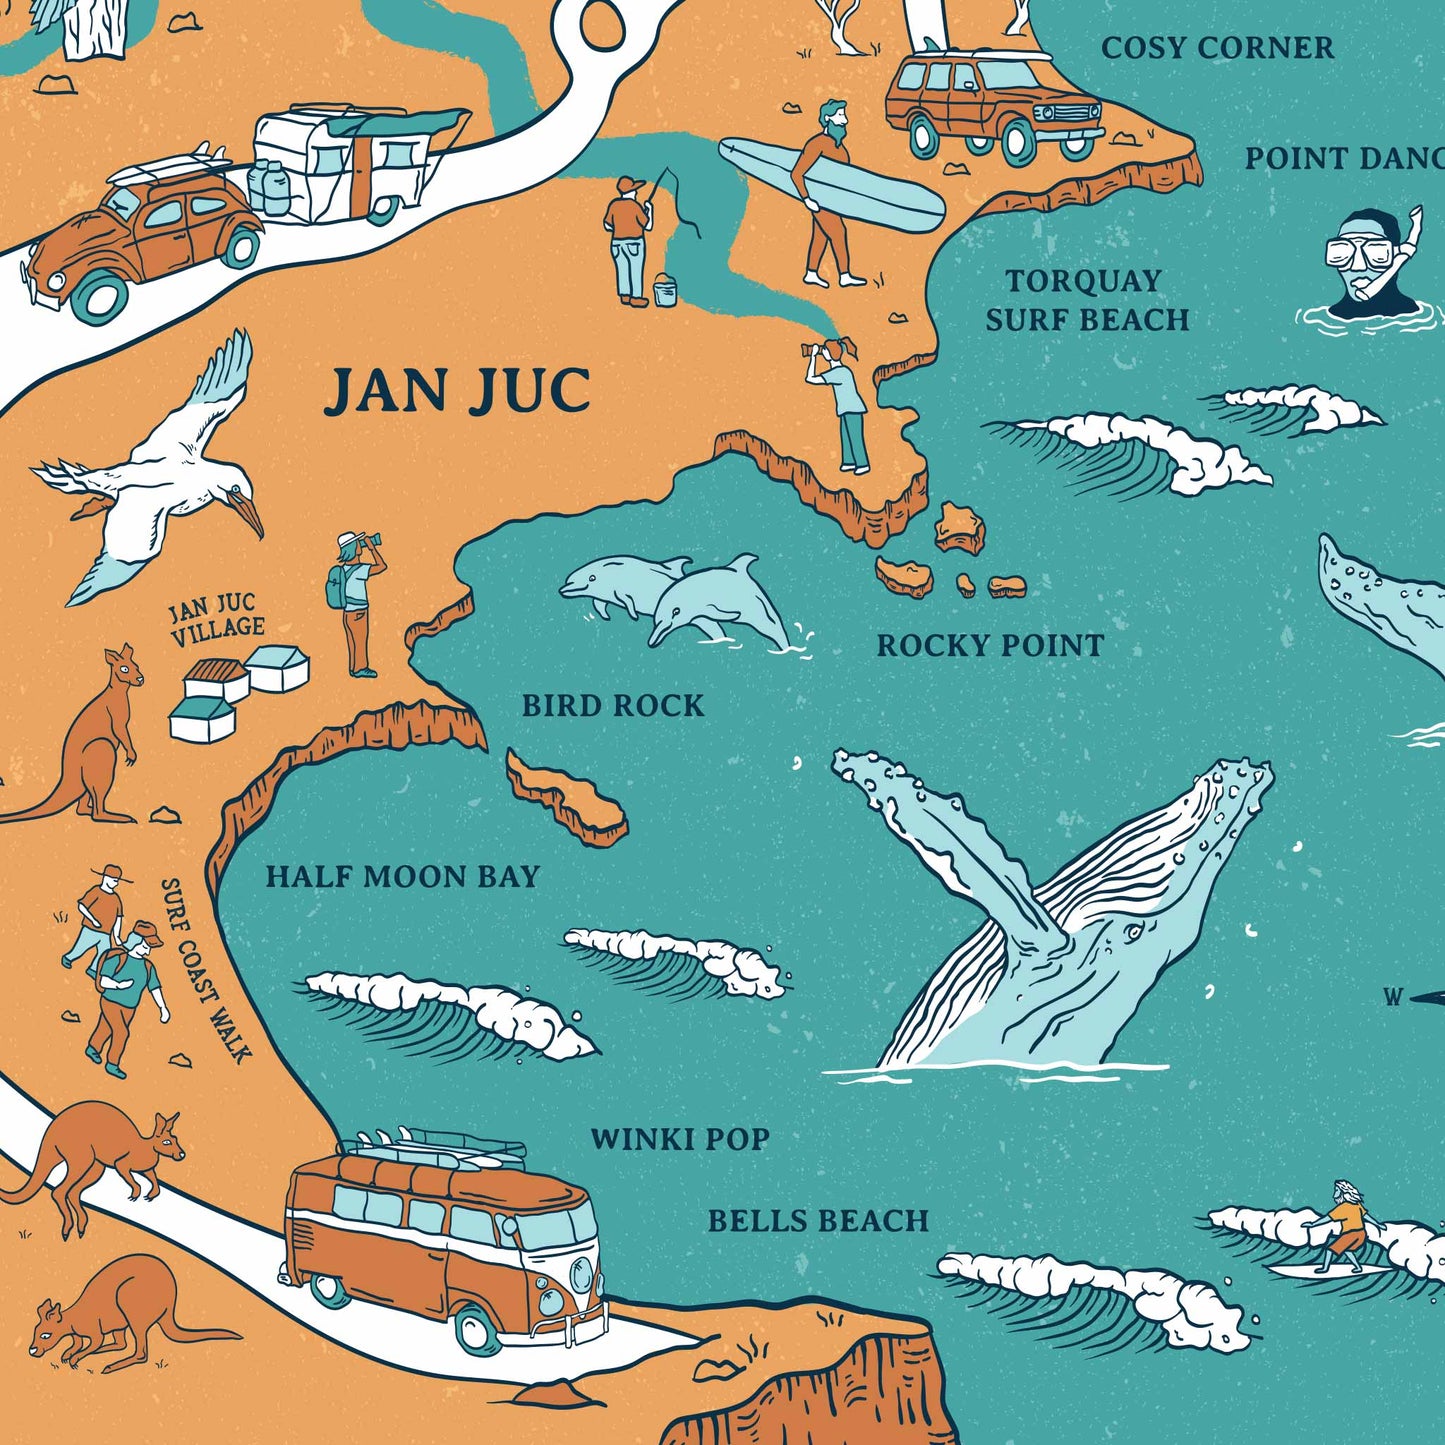 Torquay & Jan Juc | Illustrated Map